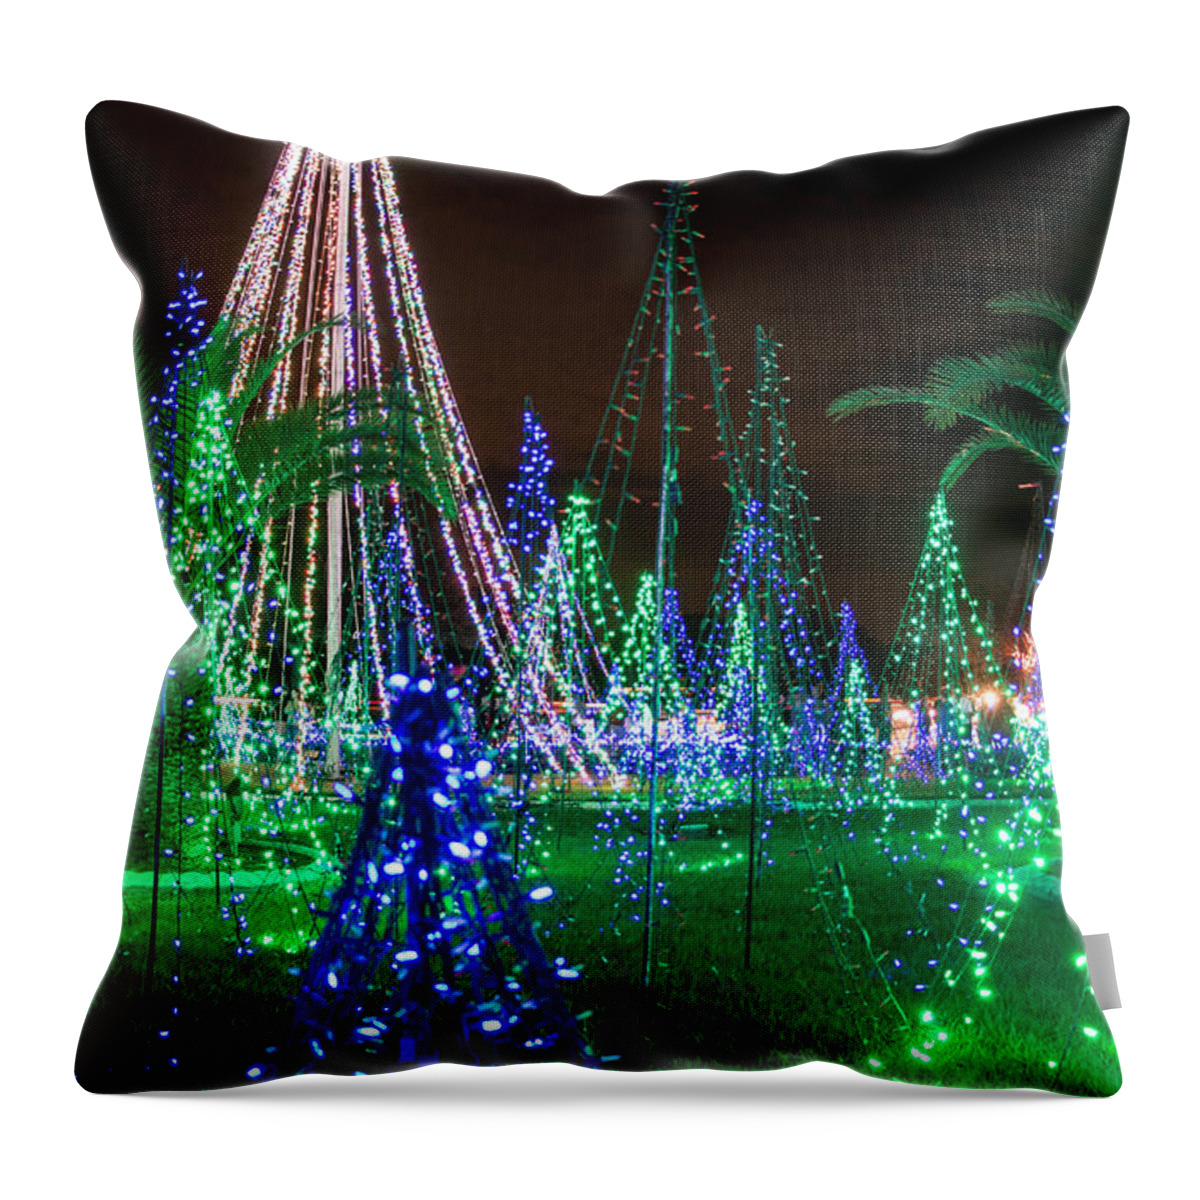 Christmas Throw Pillow featuring the photograph Christmas Lights 2 by Richard Goldman